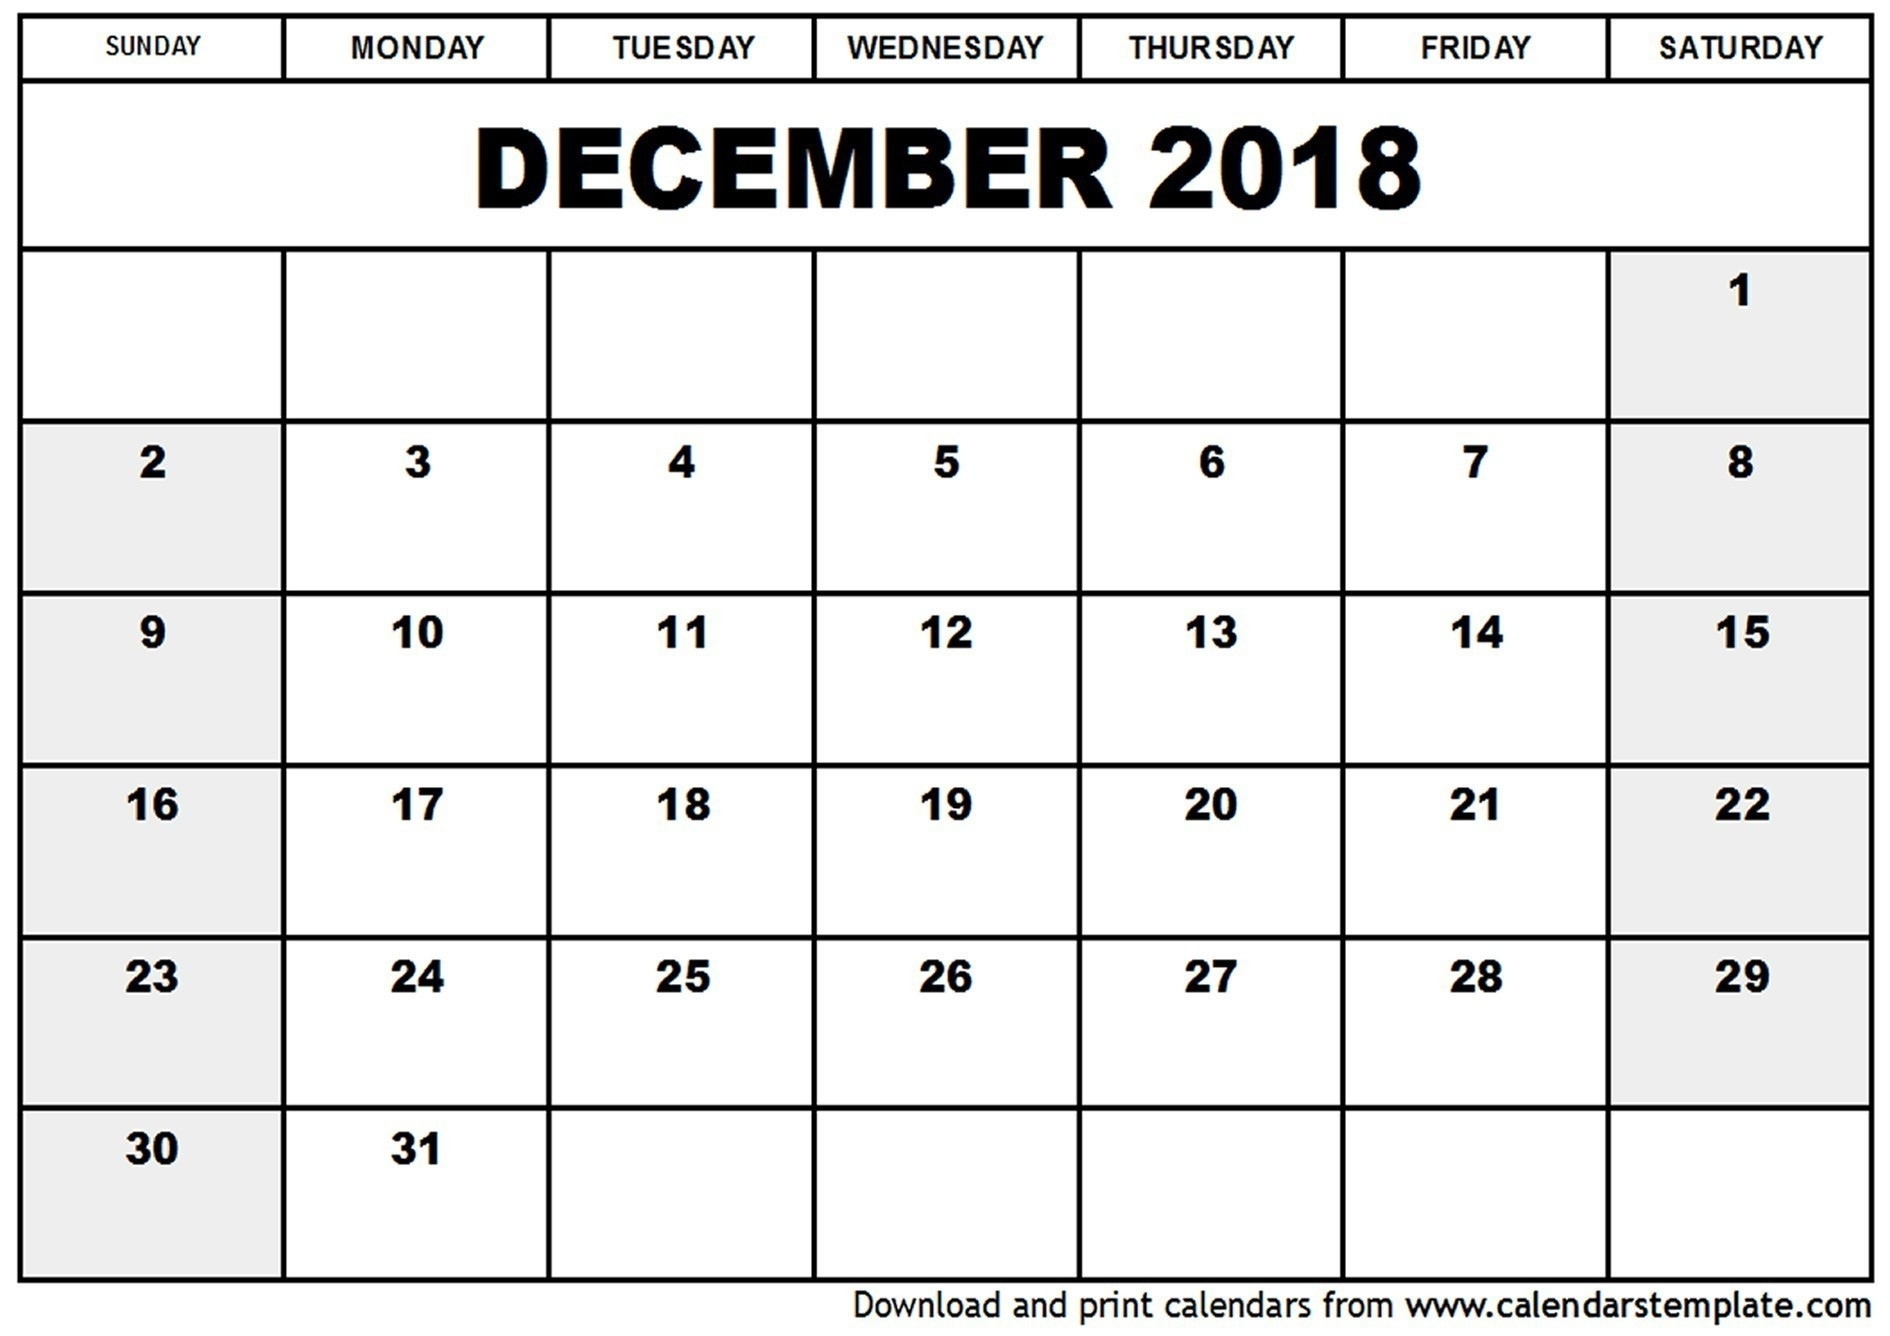 8 X 11 Printable December 2018 Calendar | Holidays Calendar Template 8 X 11 Monthly Calendar